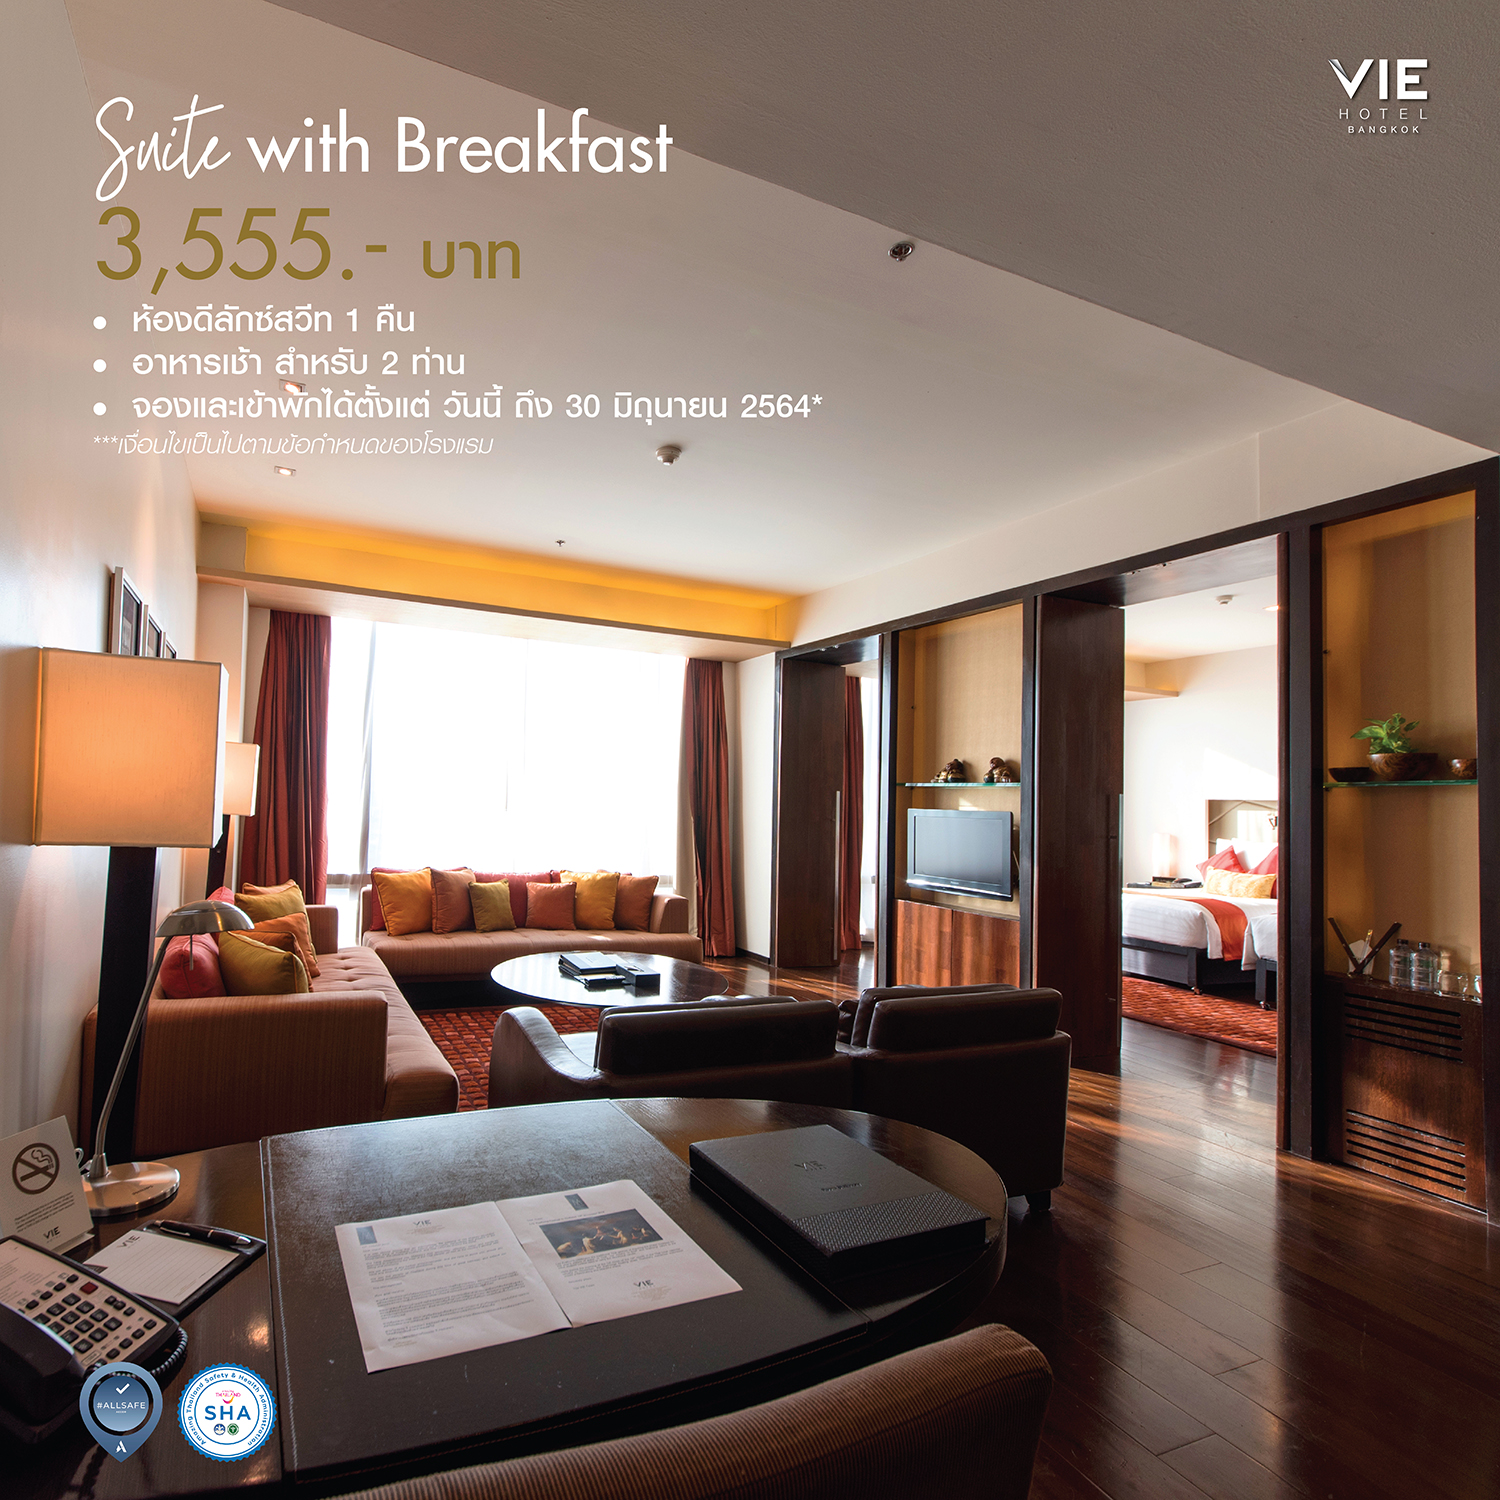 VIE Hotel Bangkok, MGallery - Suite with Breakfast  2วัน1คืน รวมอาหารเช้า ราคาพิเศษ 3,555 บาท